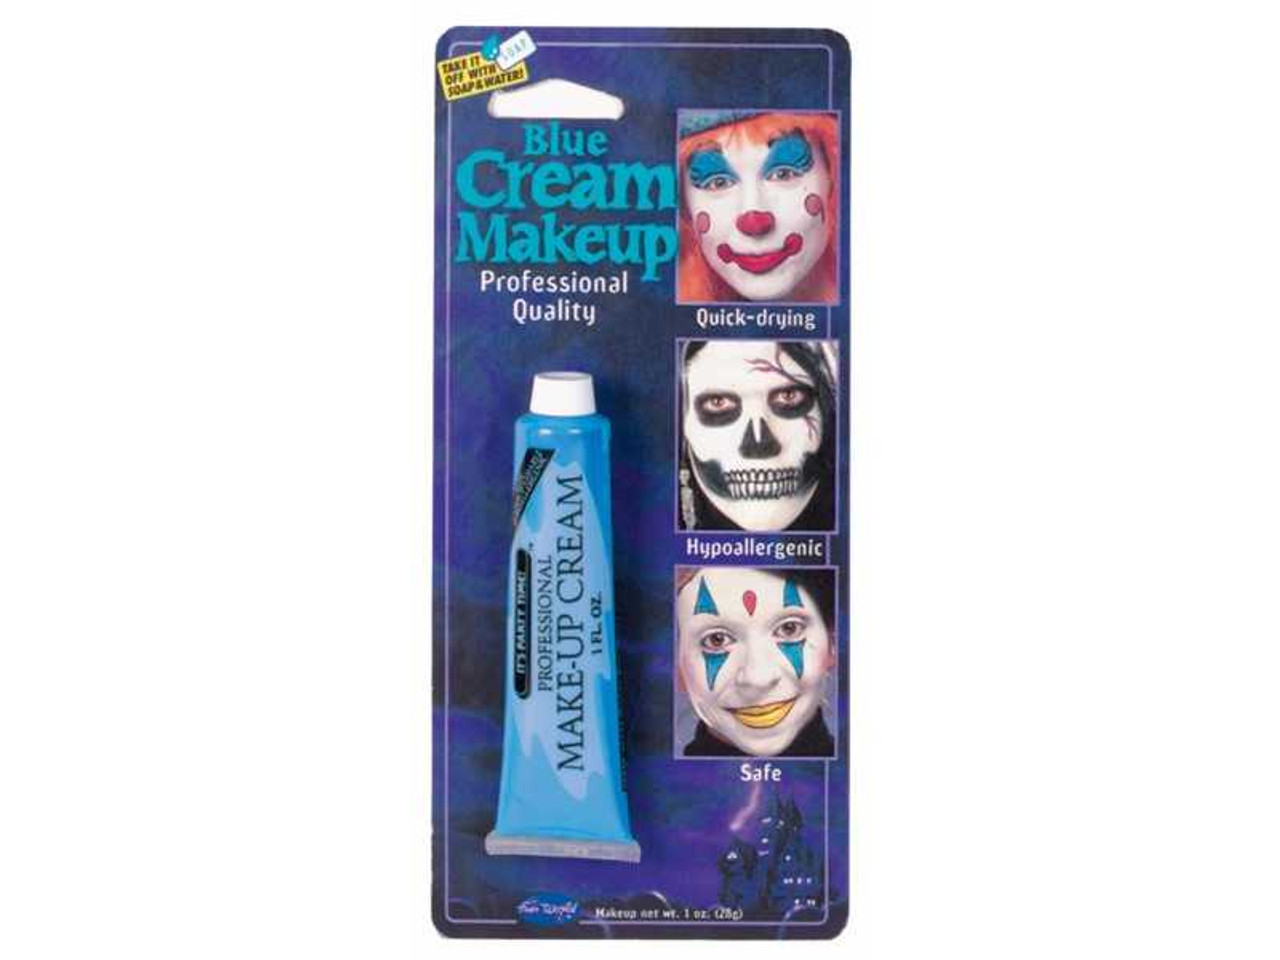 Professional Makeup Creams